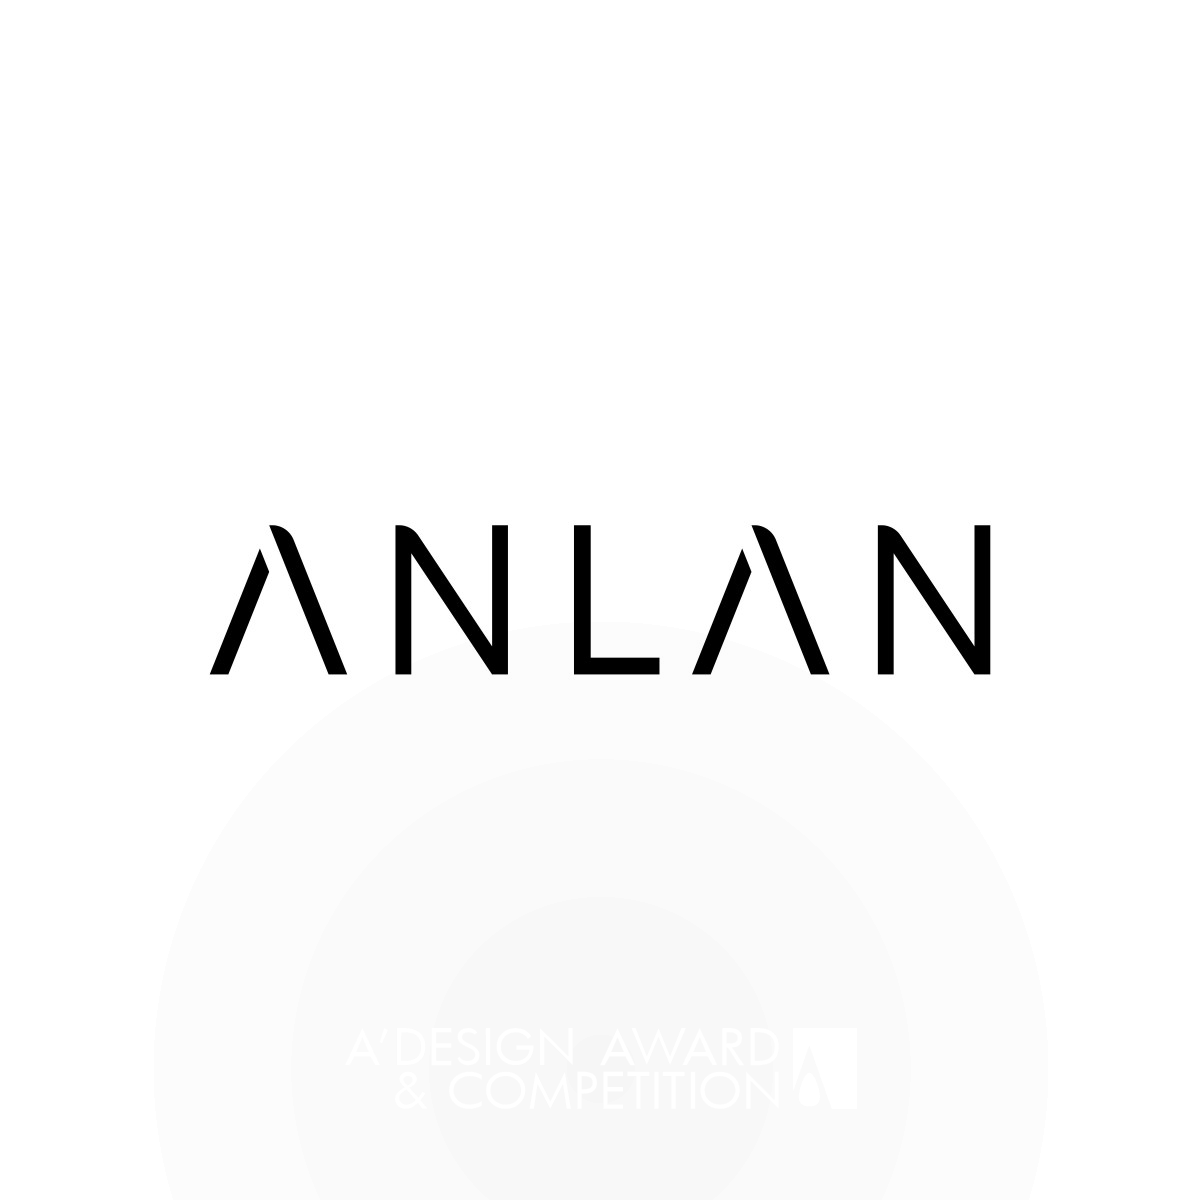 Anlan Branding Brand Identity by Haiwen YANG